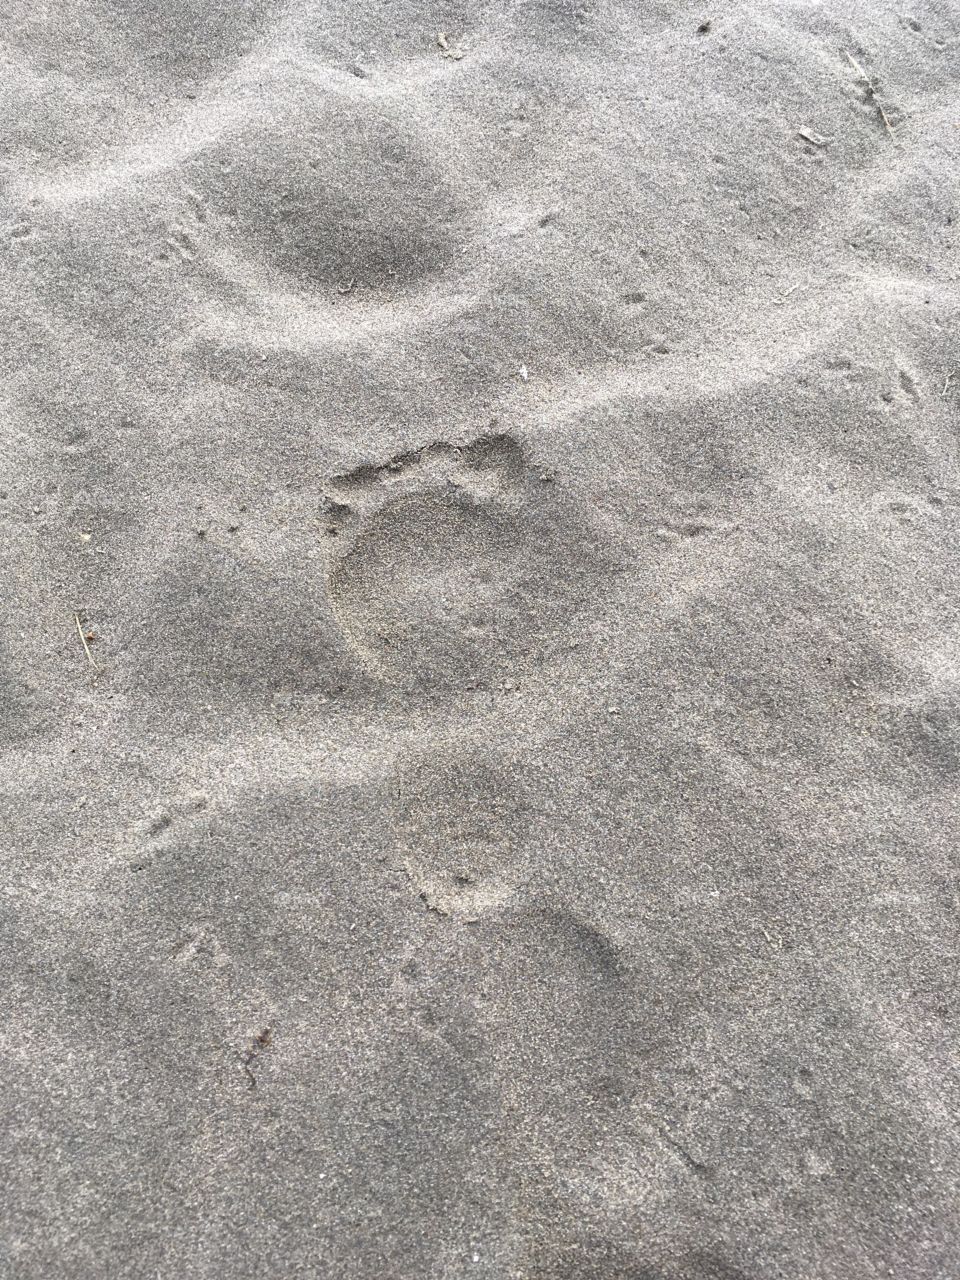 Child's footprint in sand